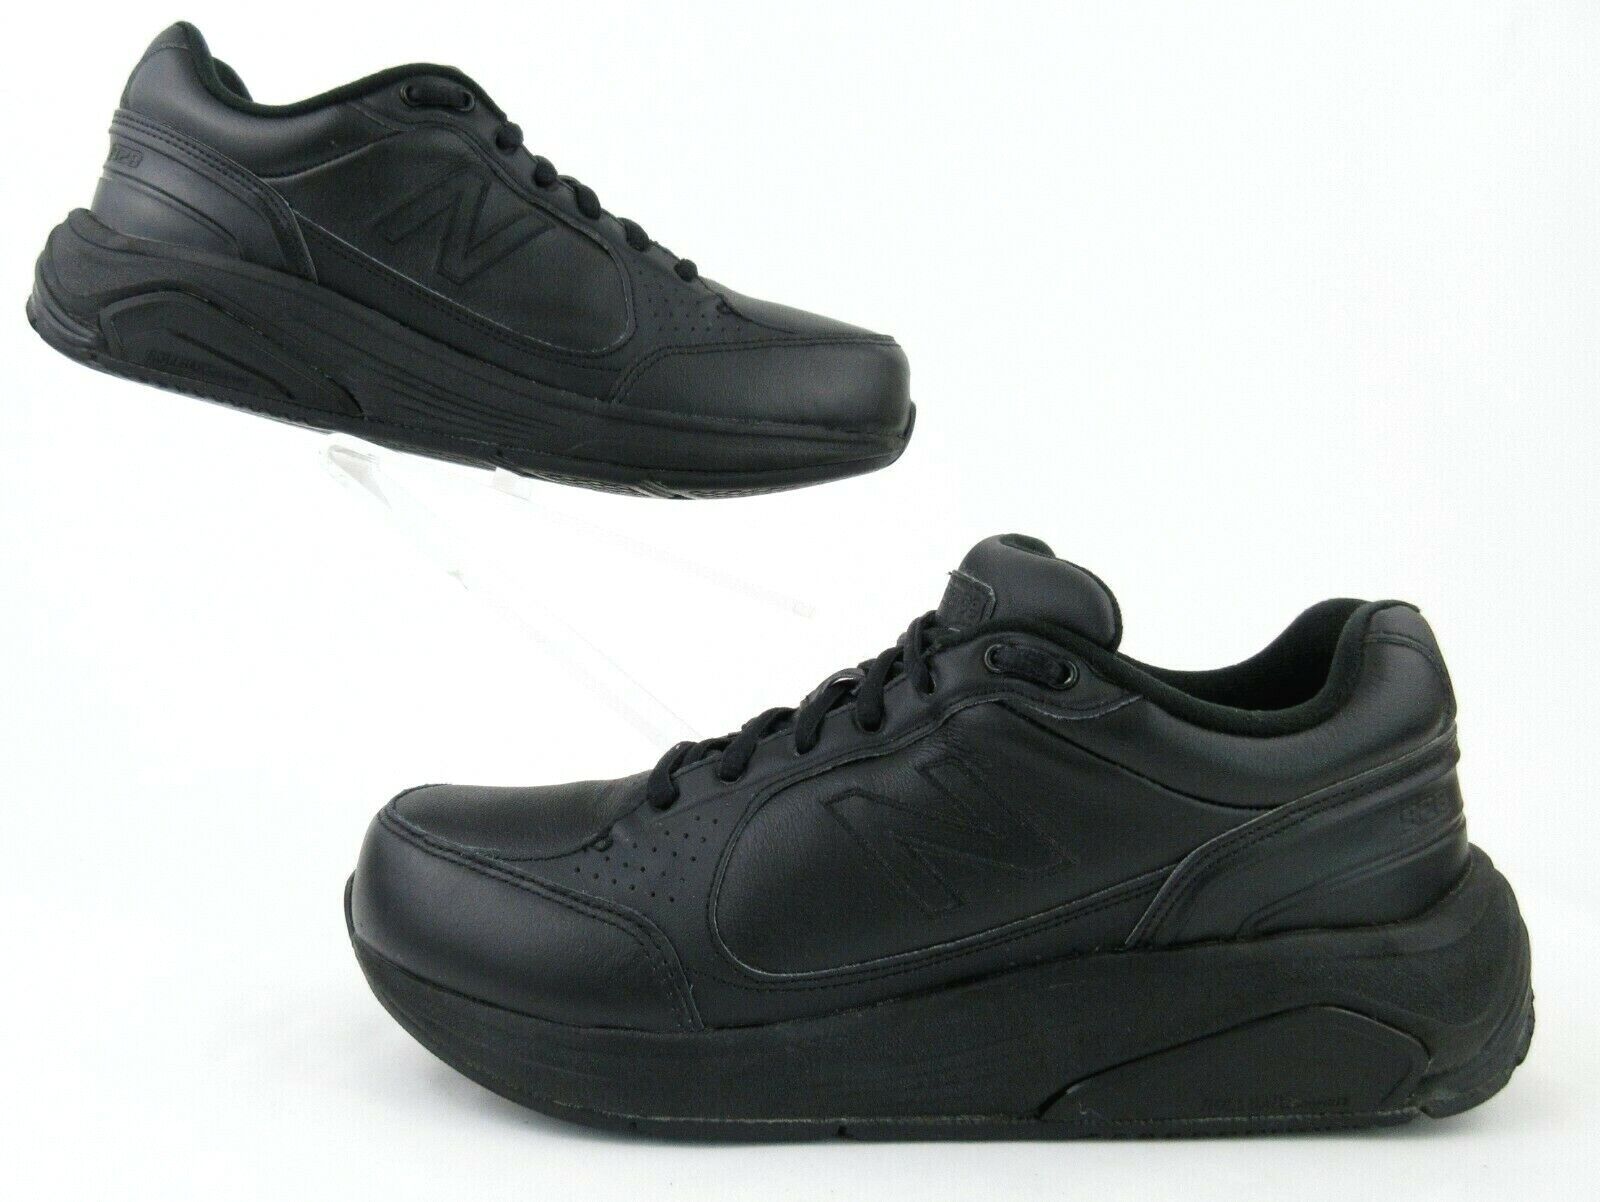 Logically neighbor Process New Balance 928v1 Womens Walking Shoes Black Leather Sz 8D Wide Width | eBay